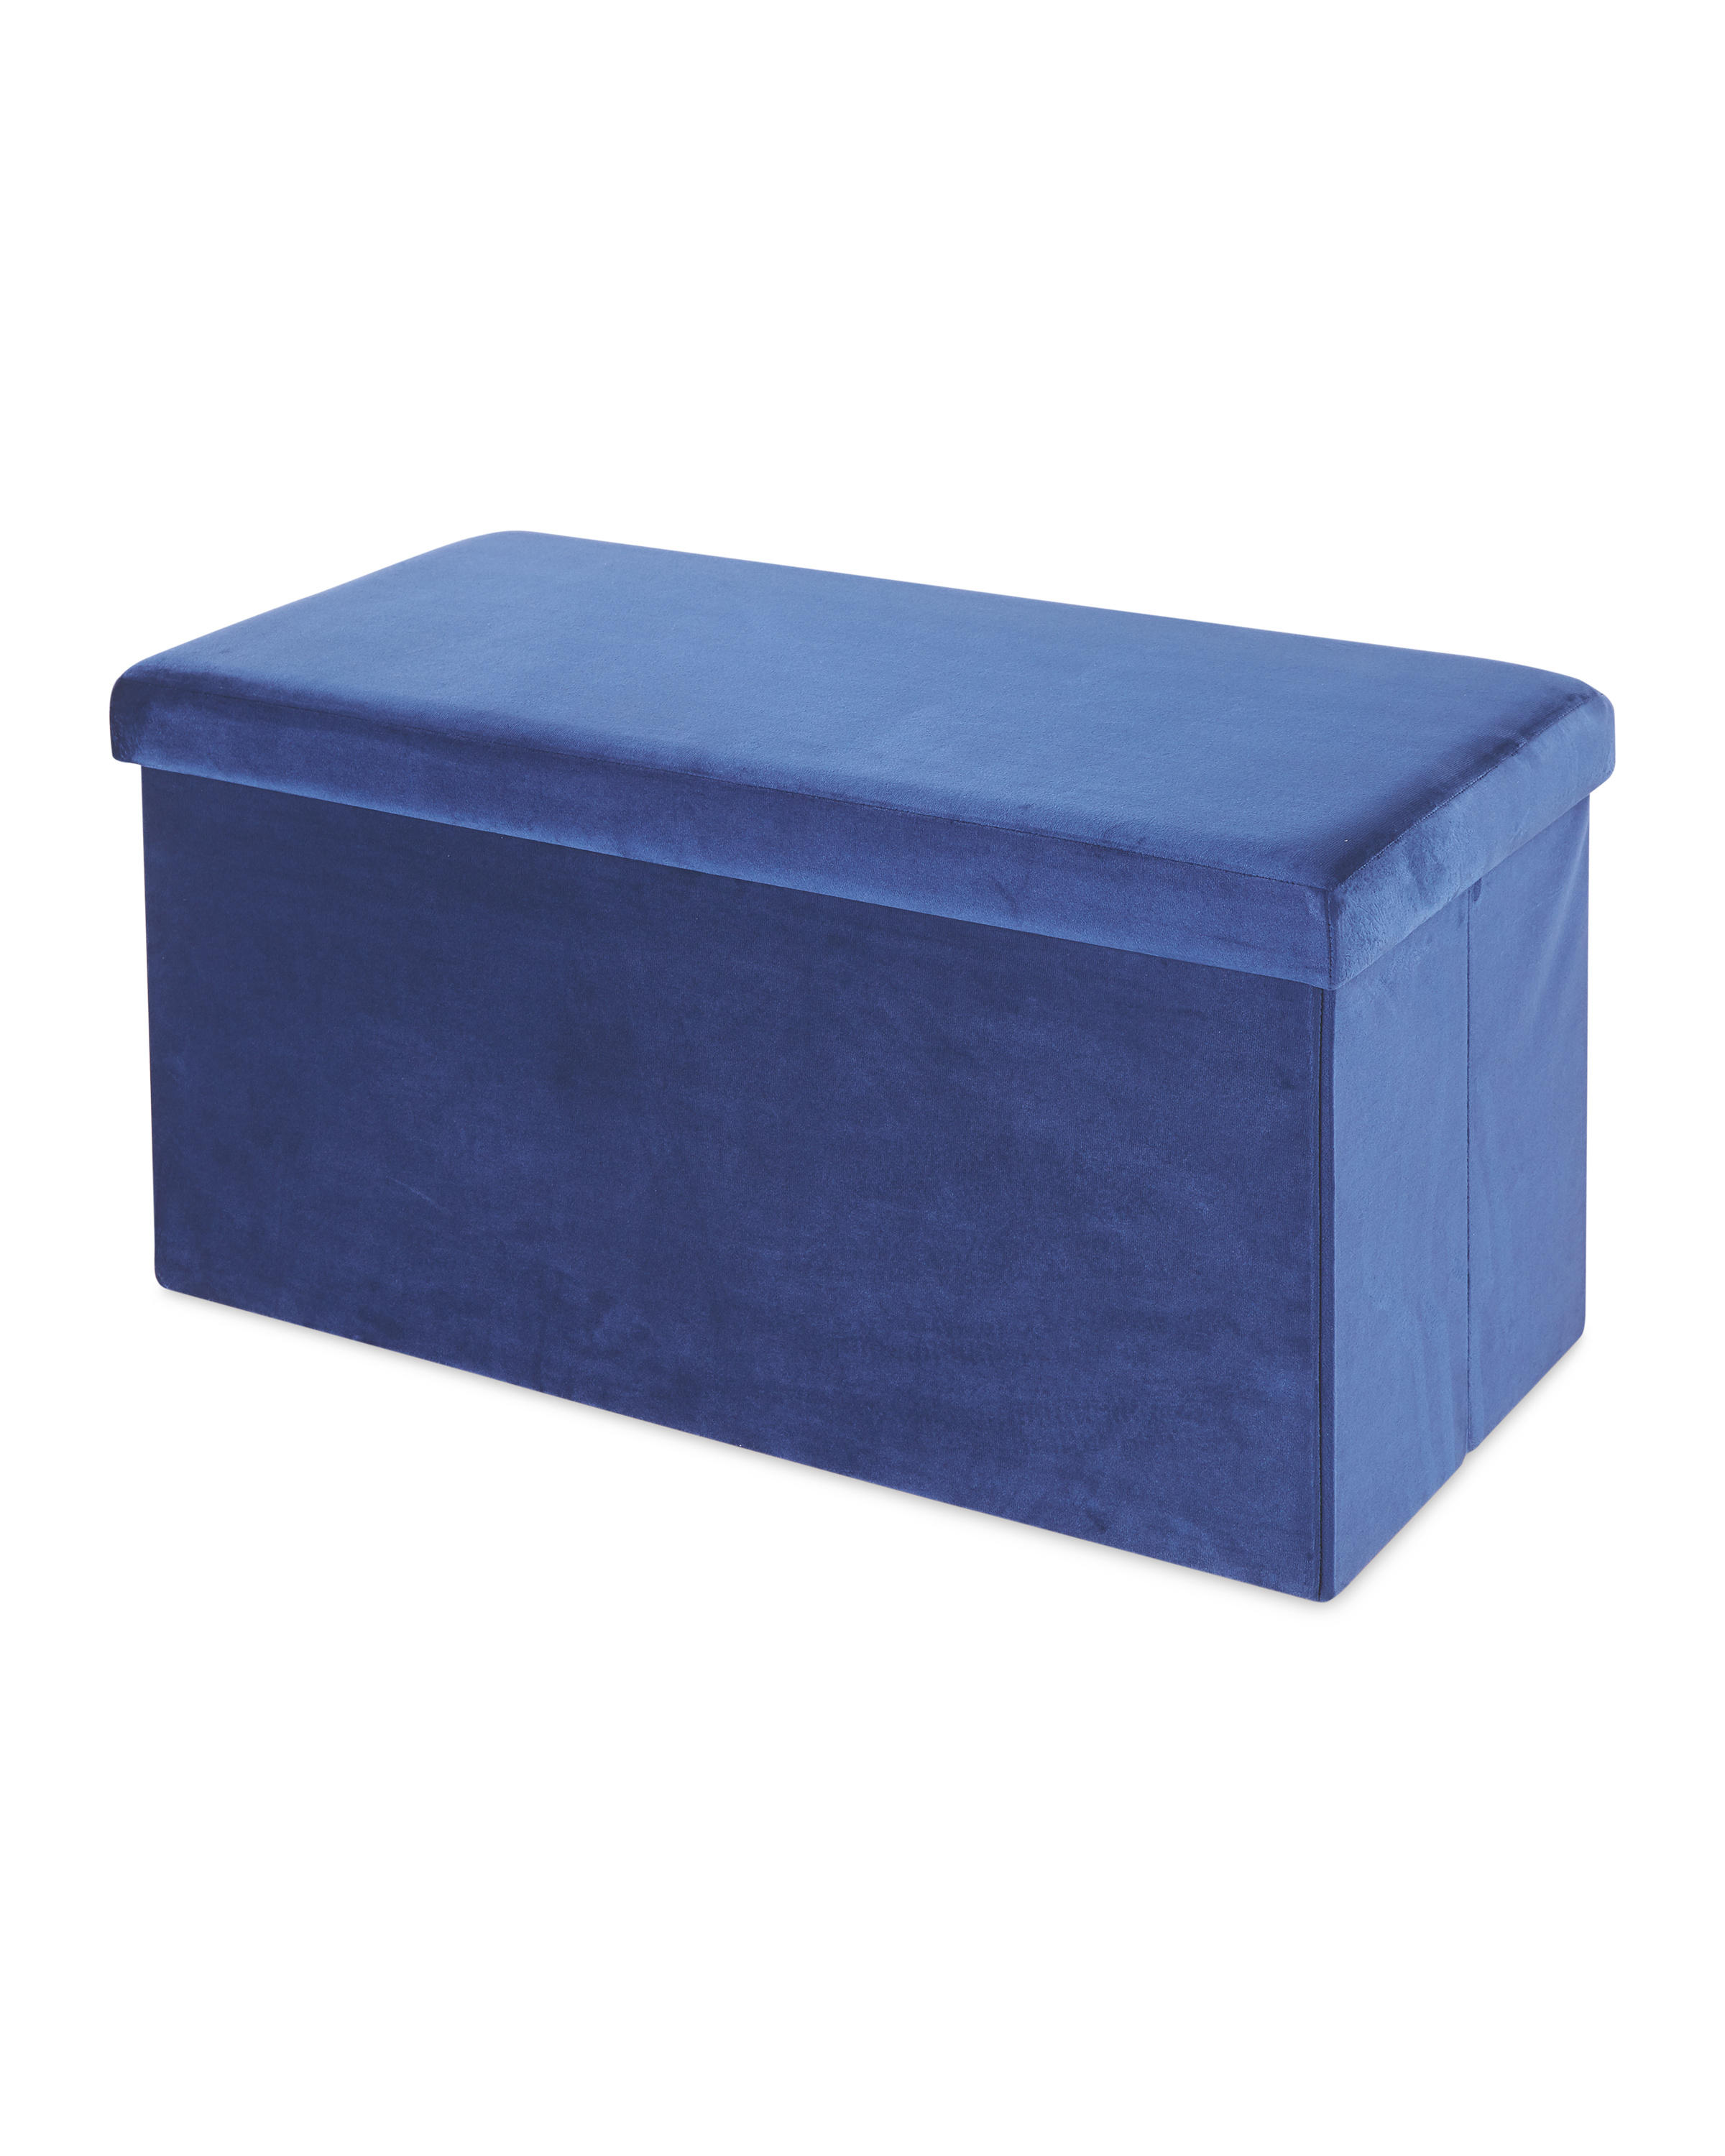 blue velvet storage ottoman